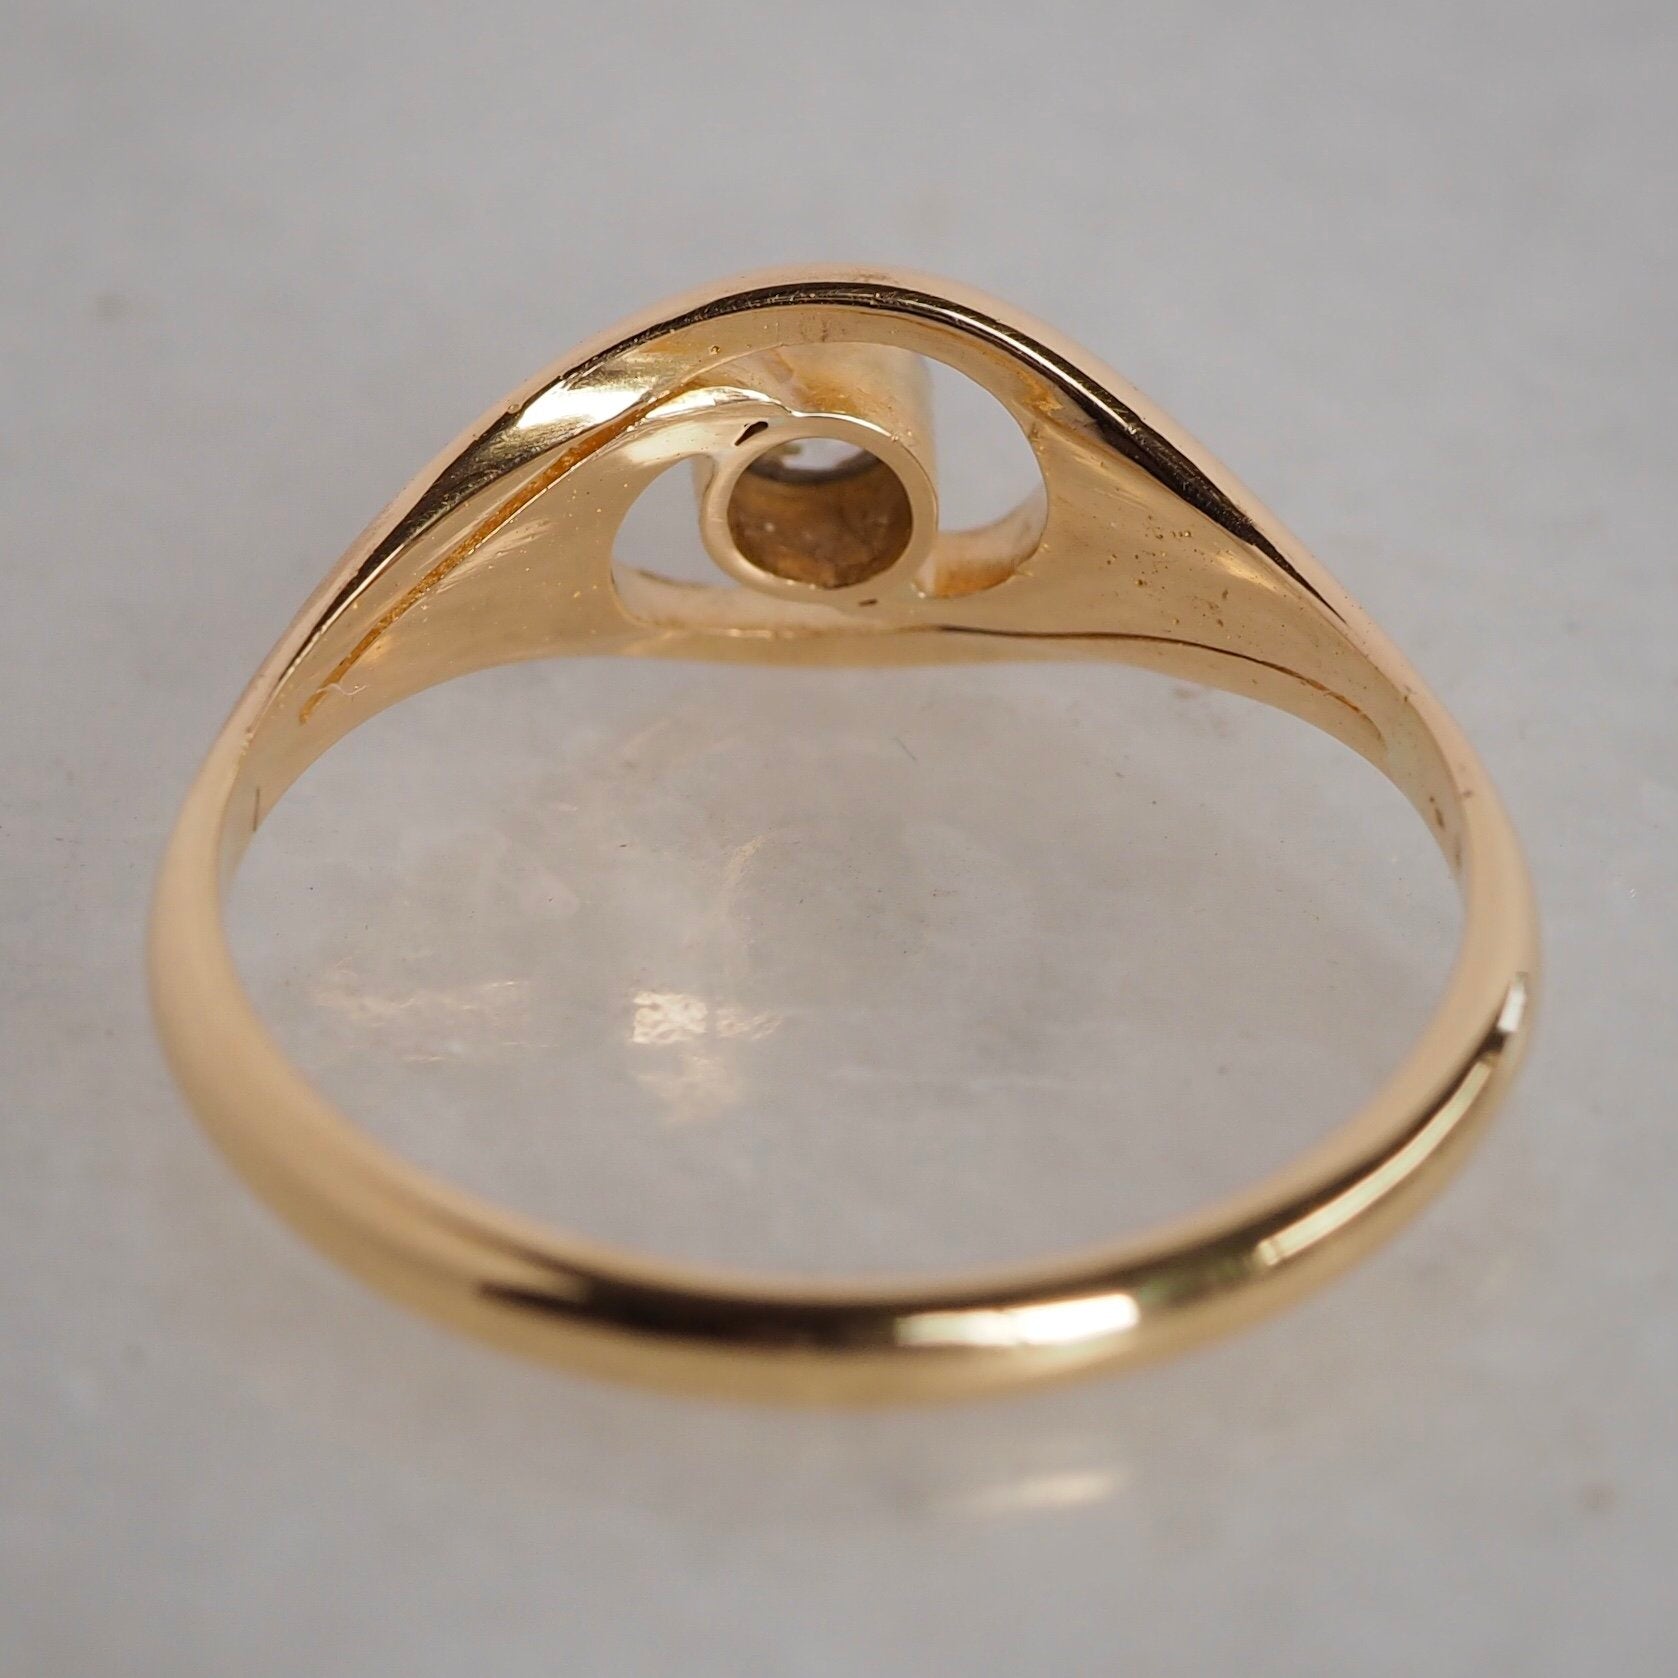 Vintage 18k Gold and Diamond Edwardian Inspired Ring